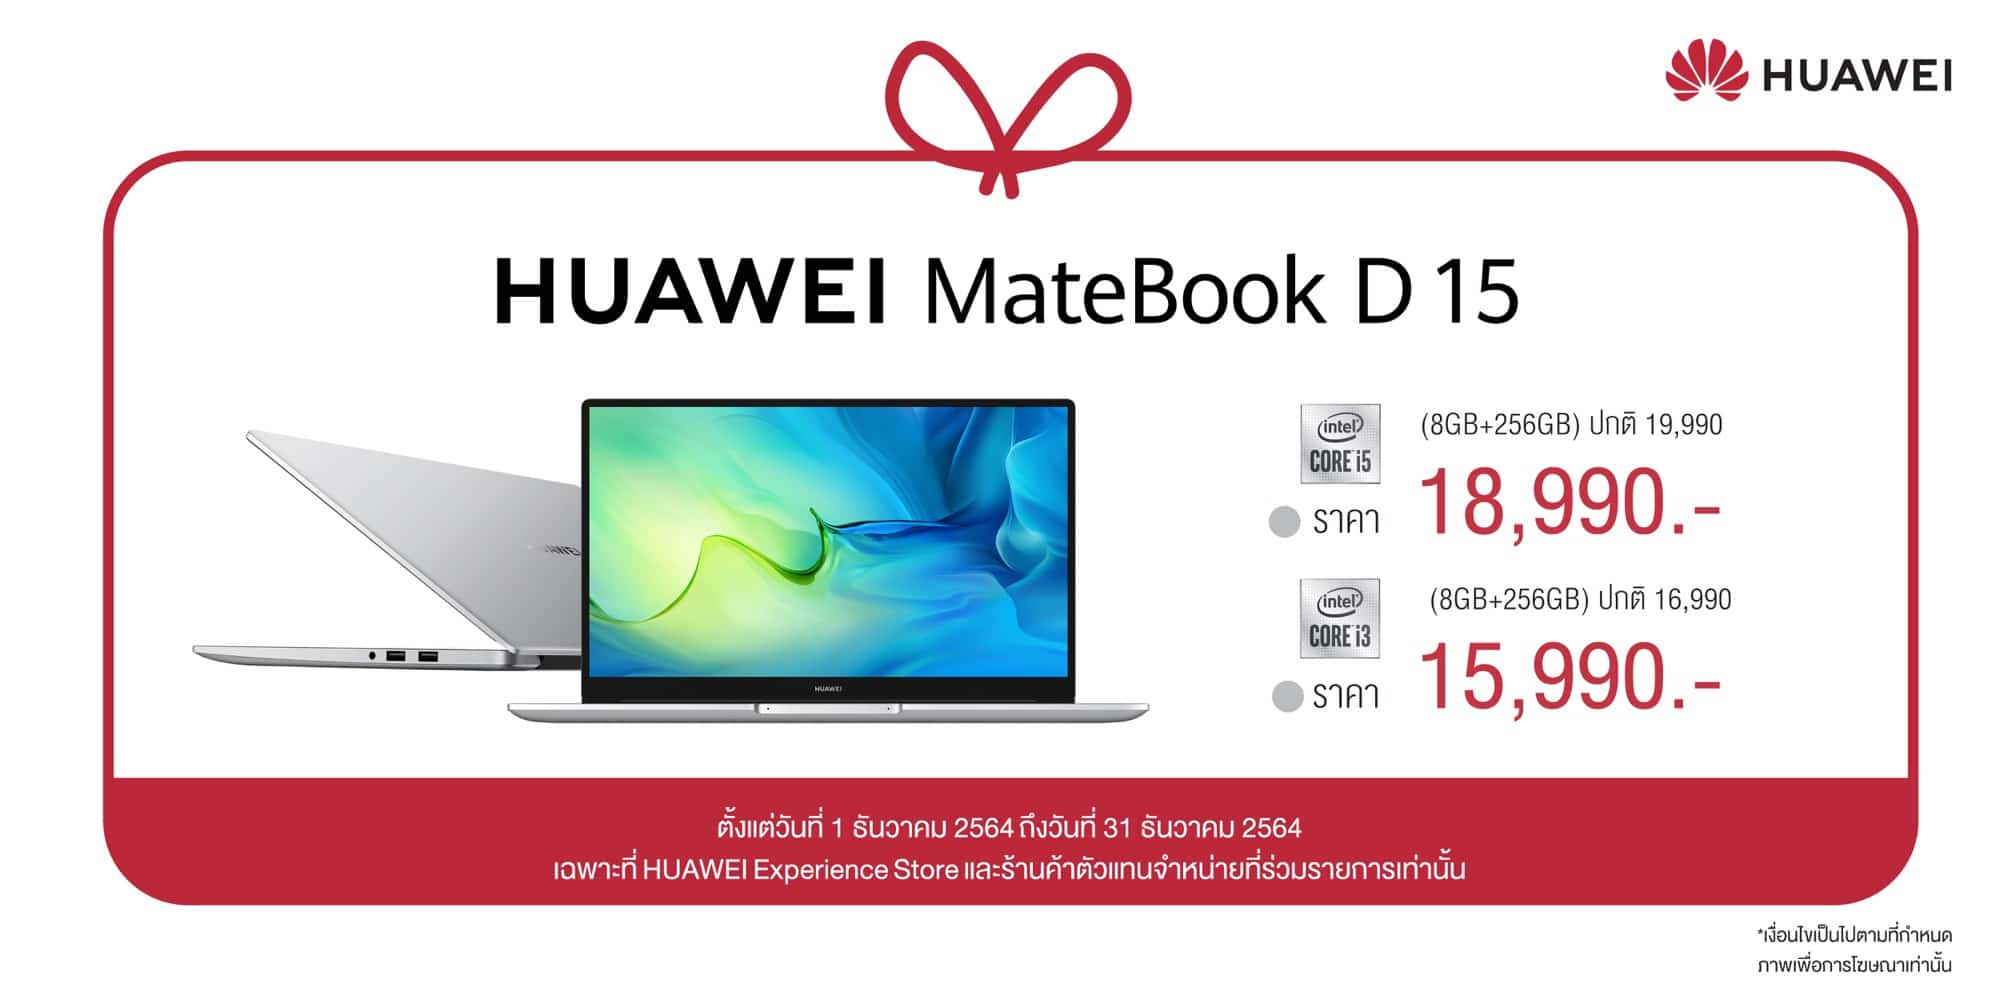 HUAWEI MateBook D Series จัดโปรราคาดี เริ่มต้น 15,990 บาท 3